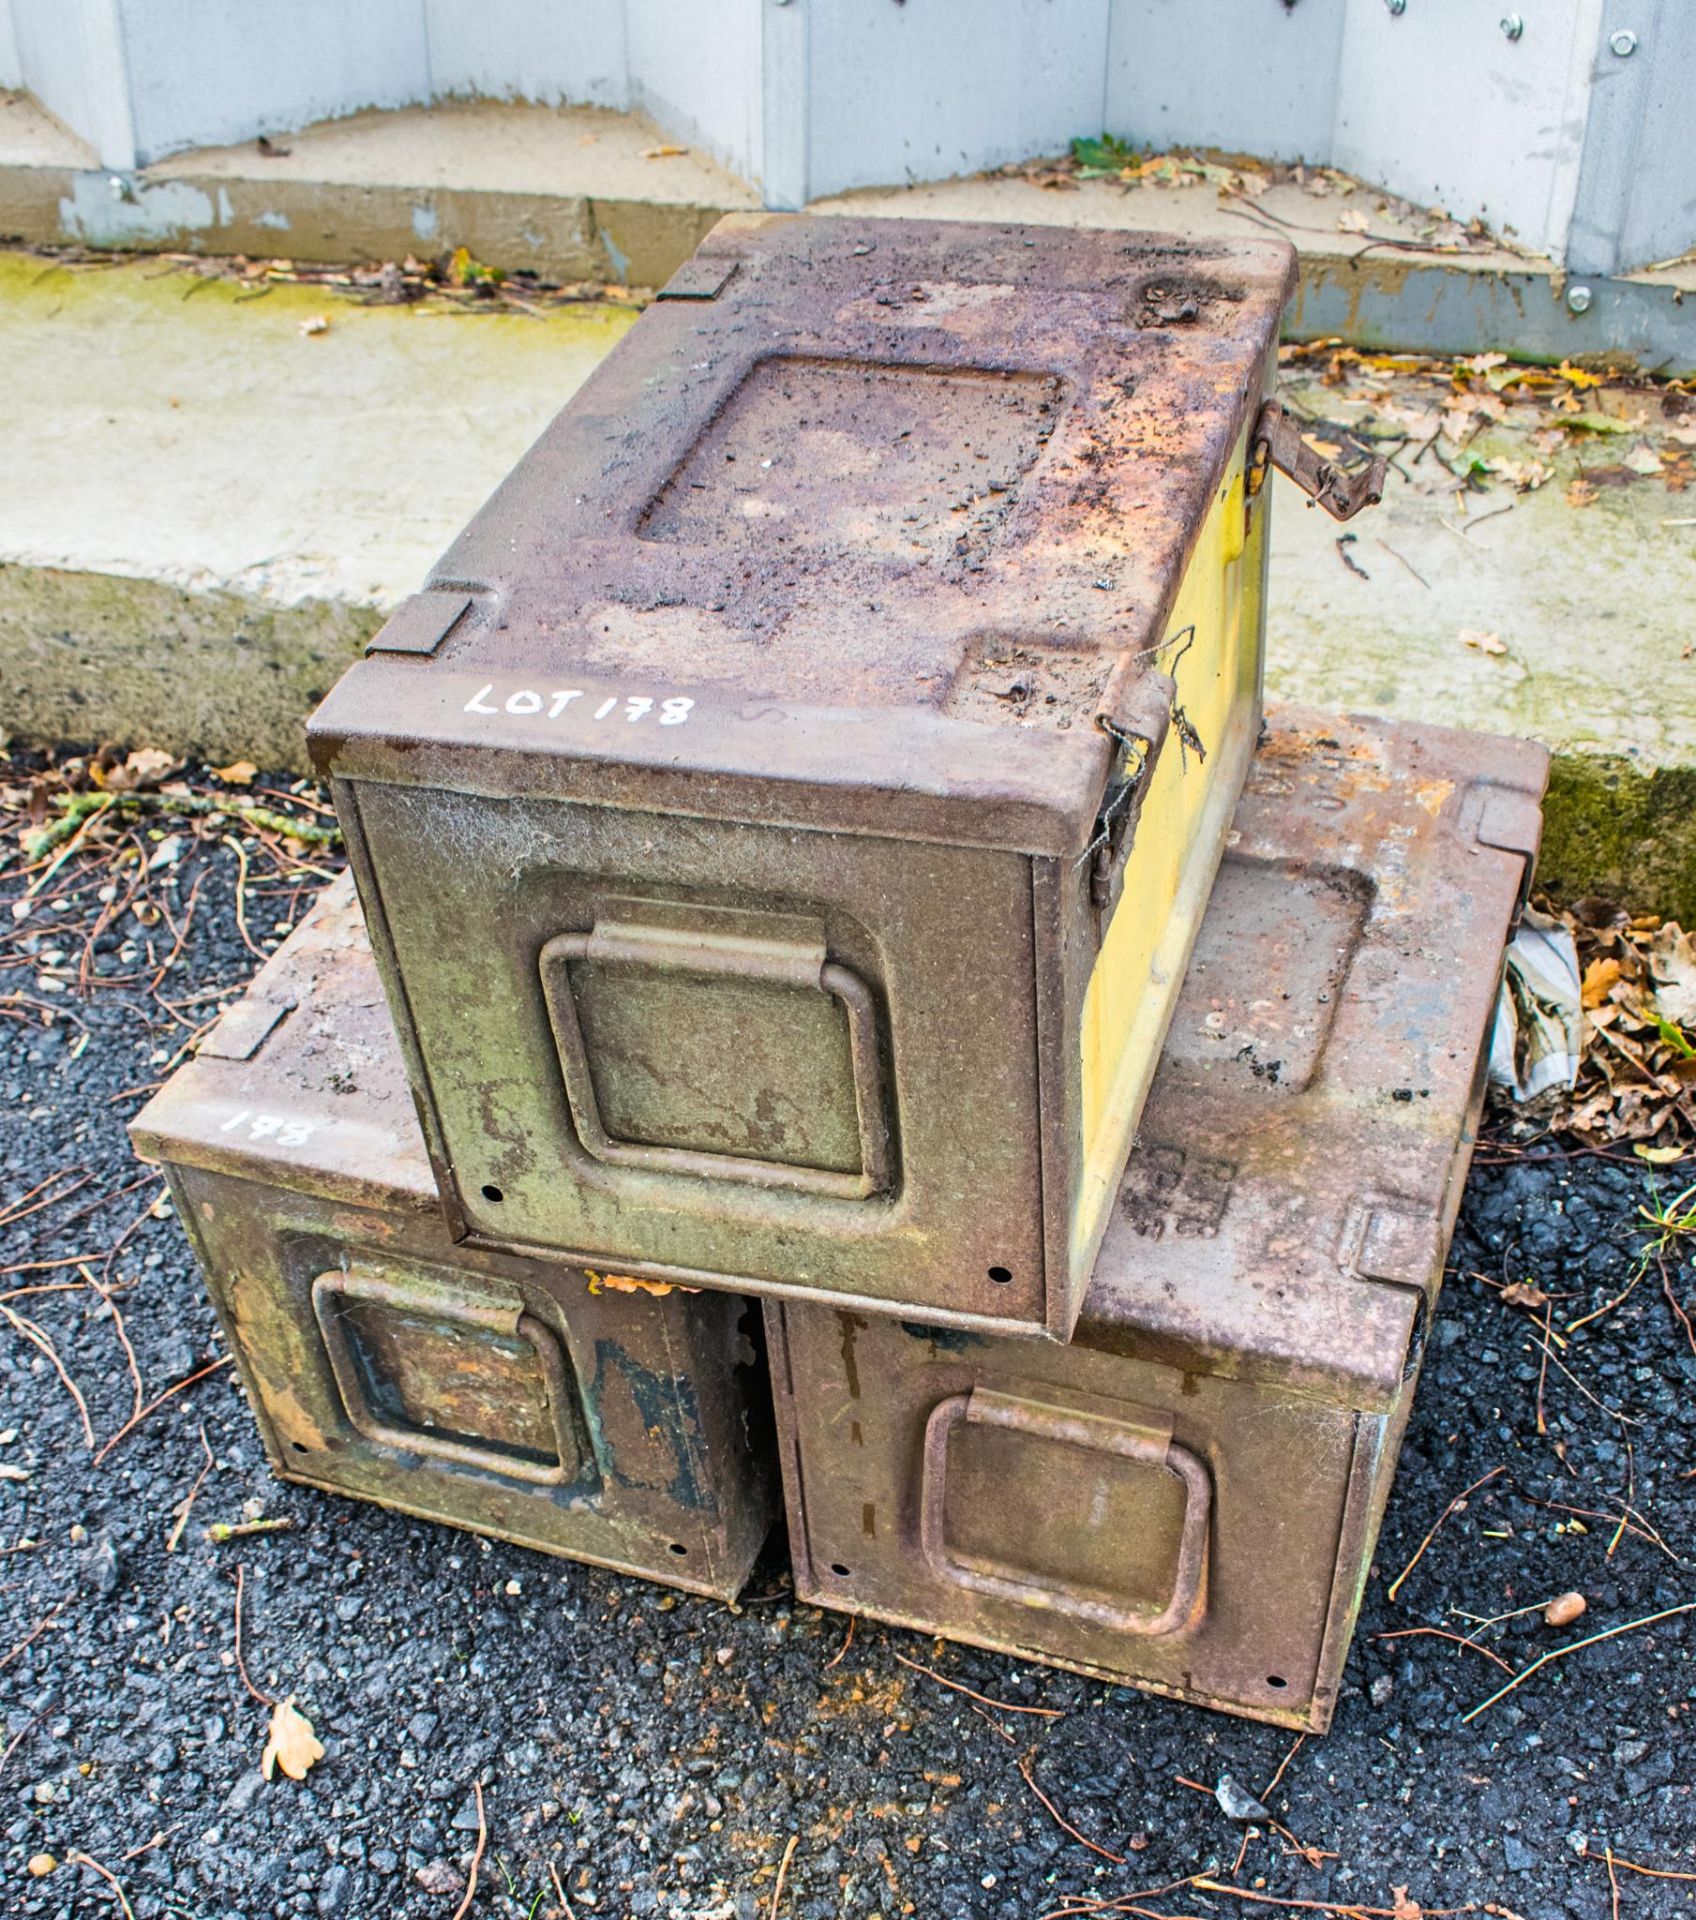 3 - brown ammunition boxes